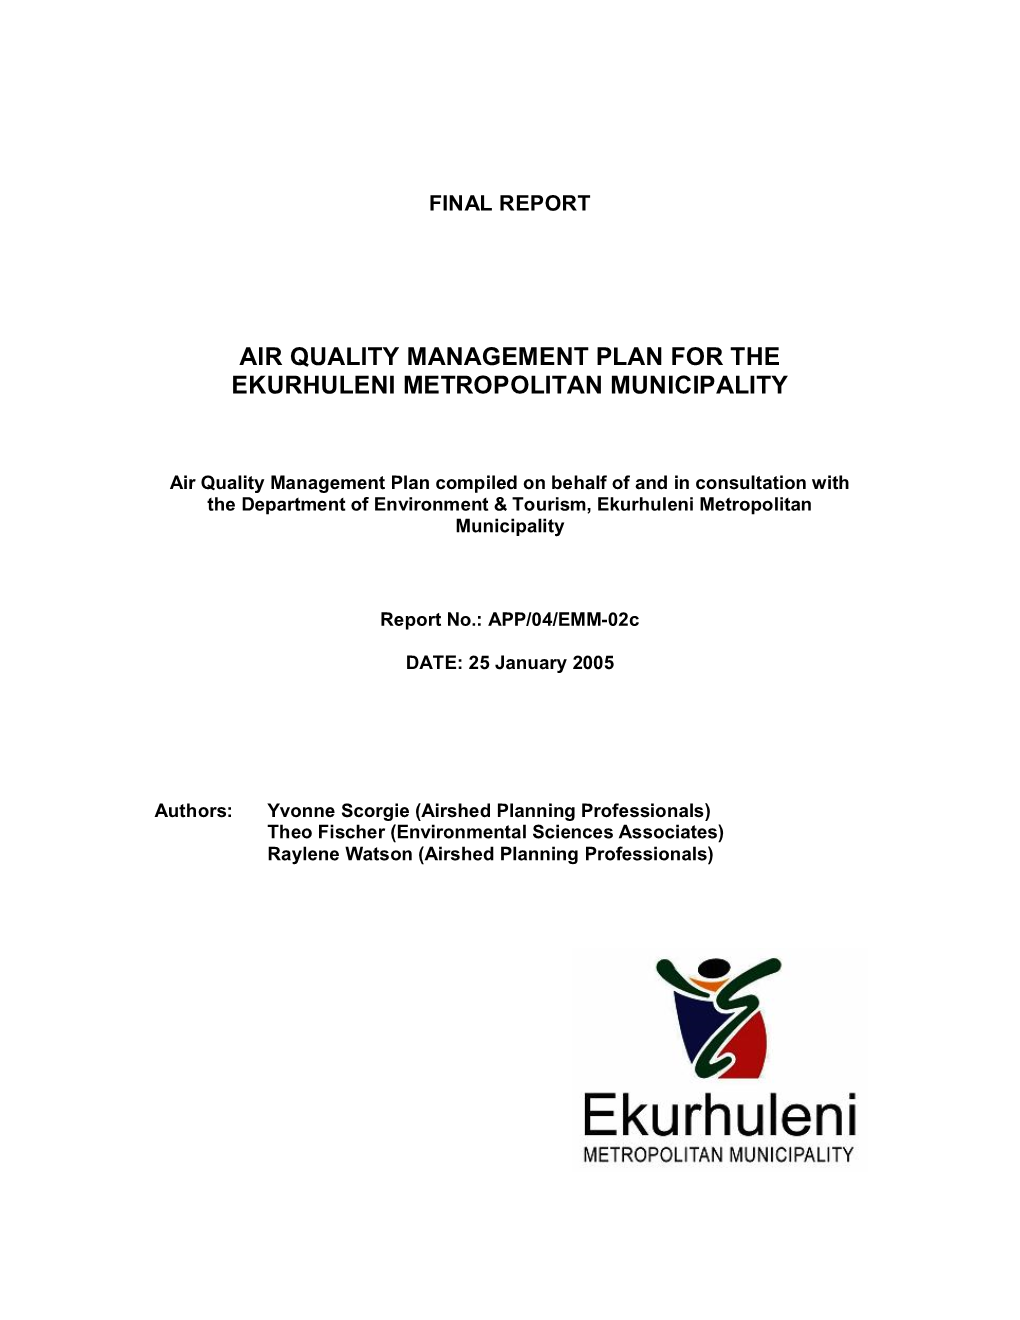 Air Quality Management Plan for the Ekurhuleni Metropolitan Municipality